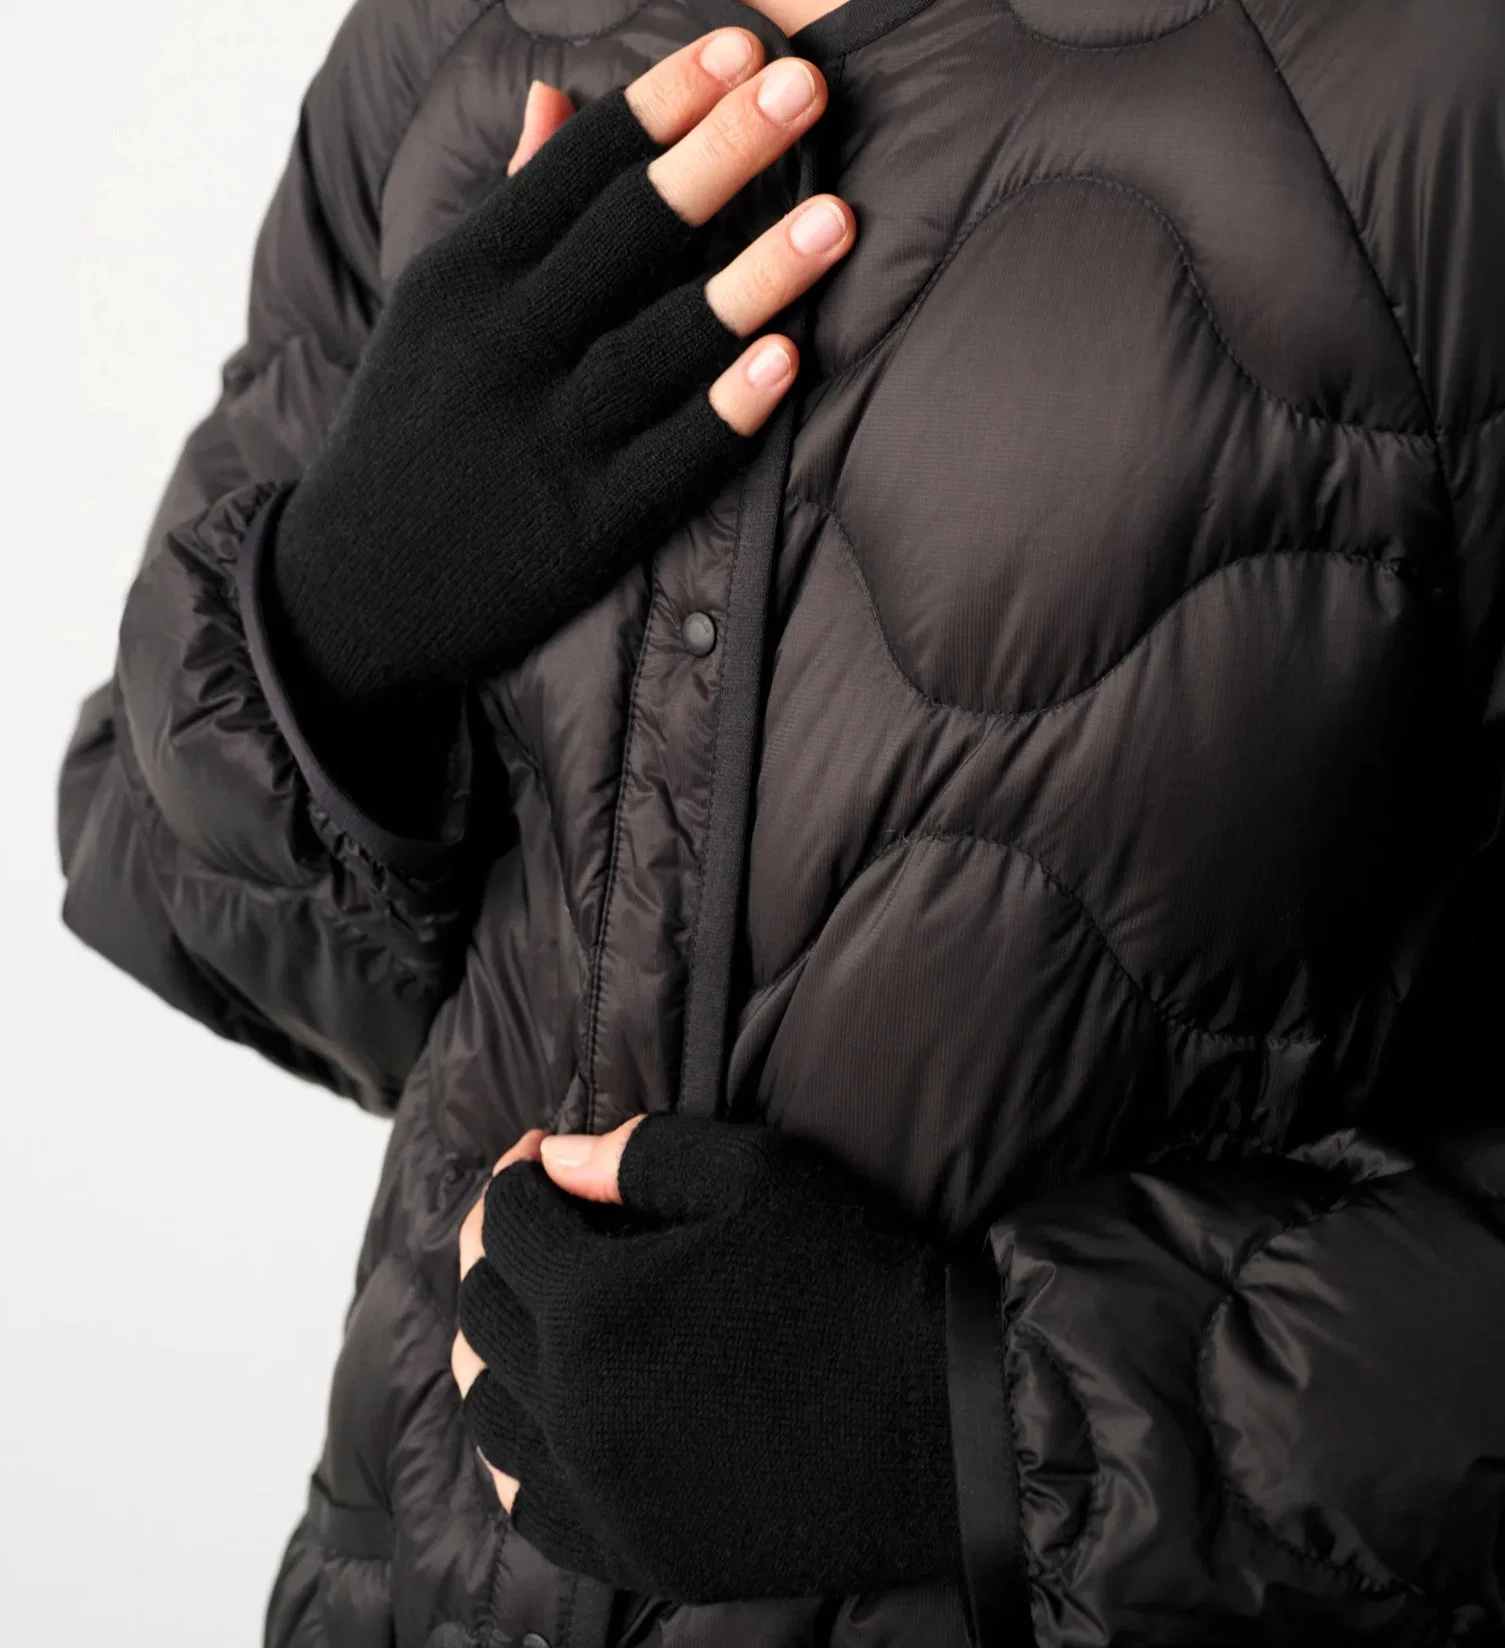 100% Cashmere Knitted Ladies Fashion Fingerless Mitten Gloves Apparel Accessories